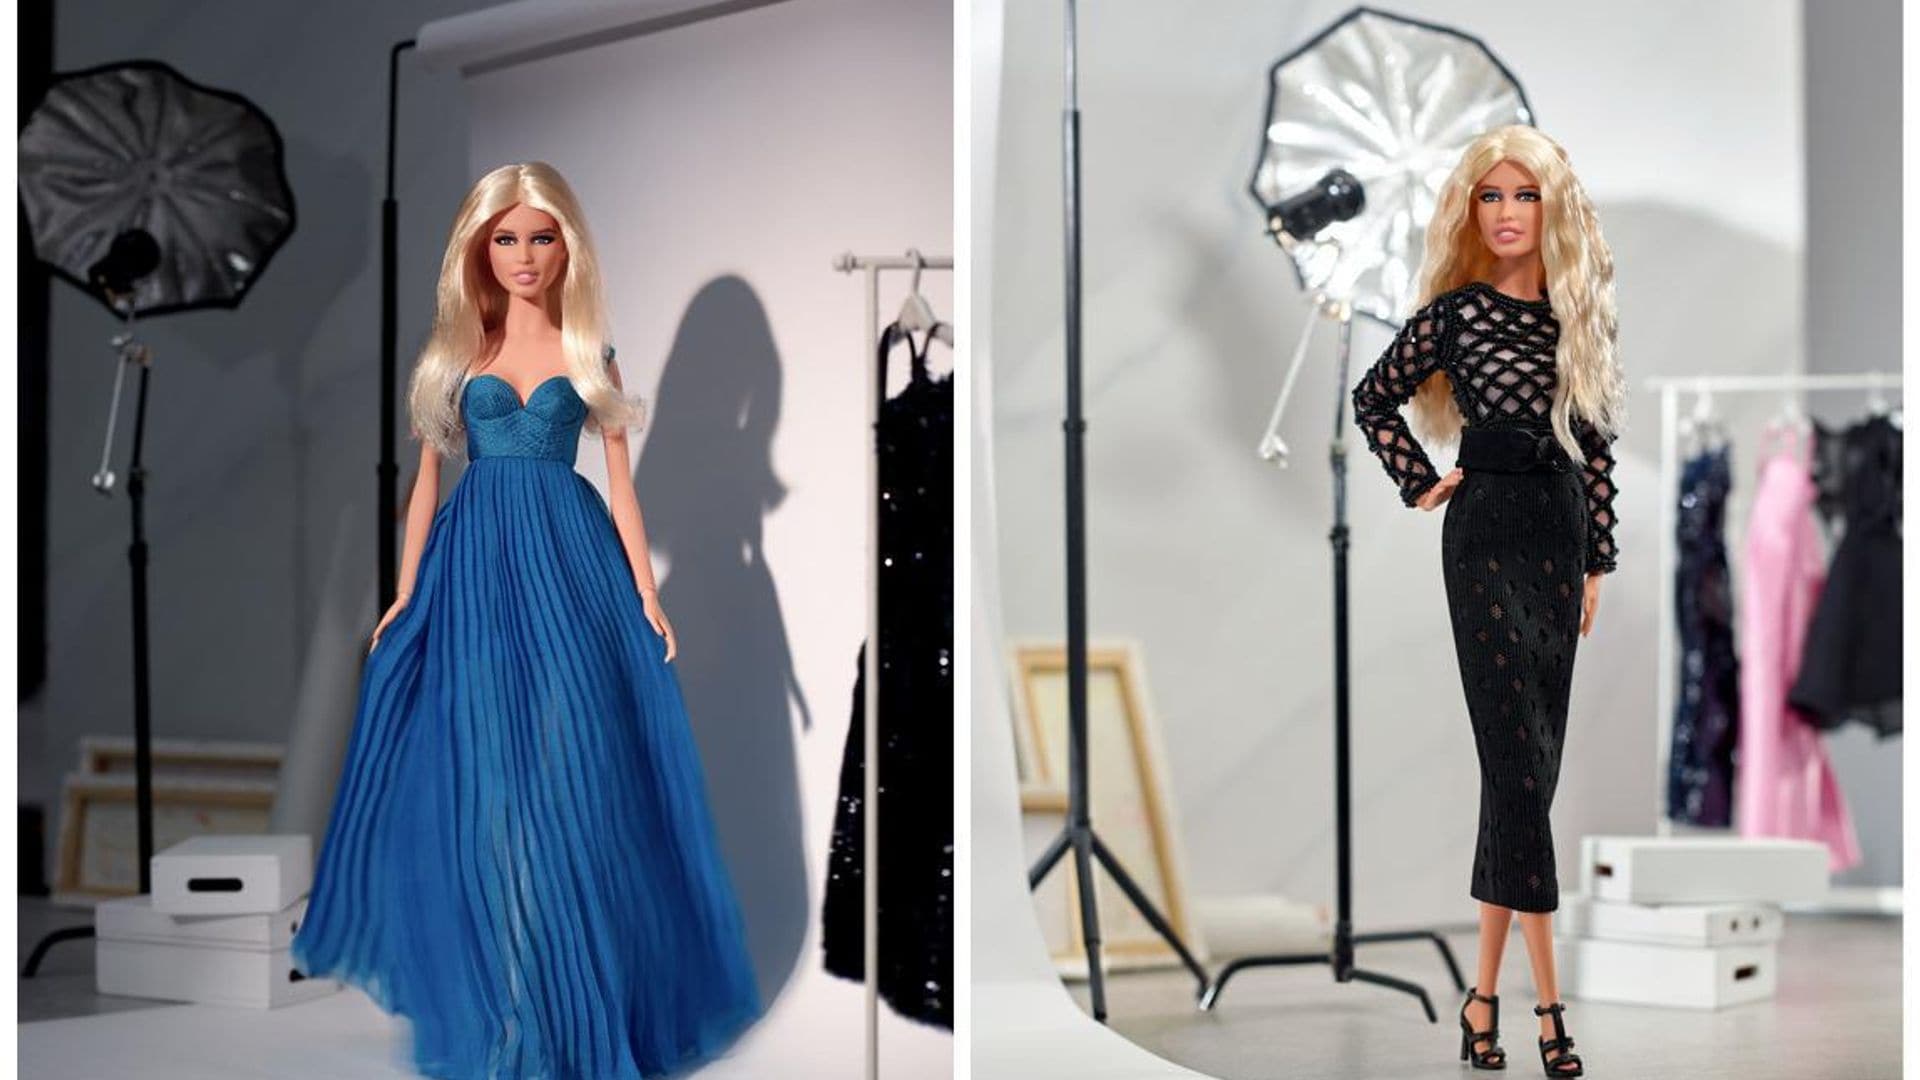 Claudia Schiffer celebrates her 50th birthday releasing a new Barbie